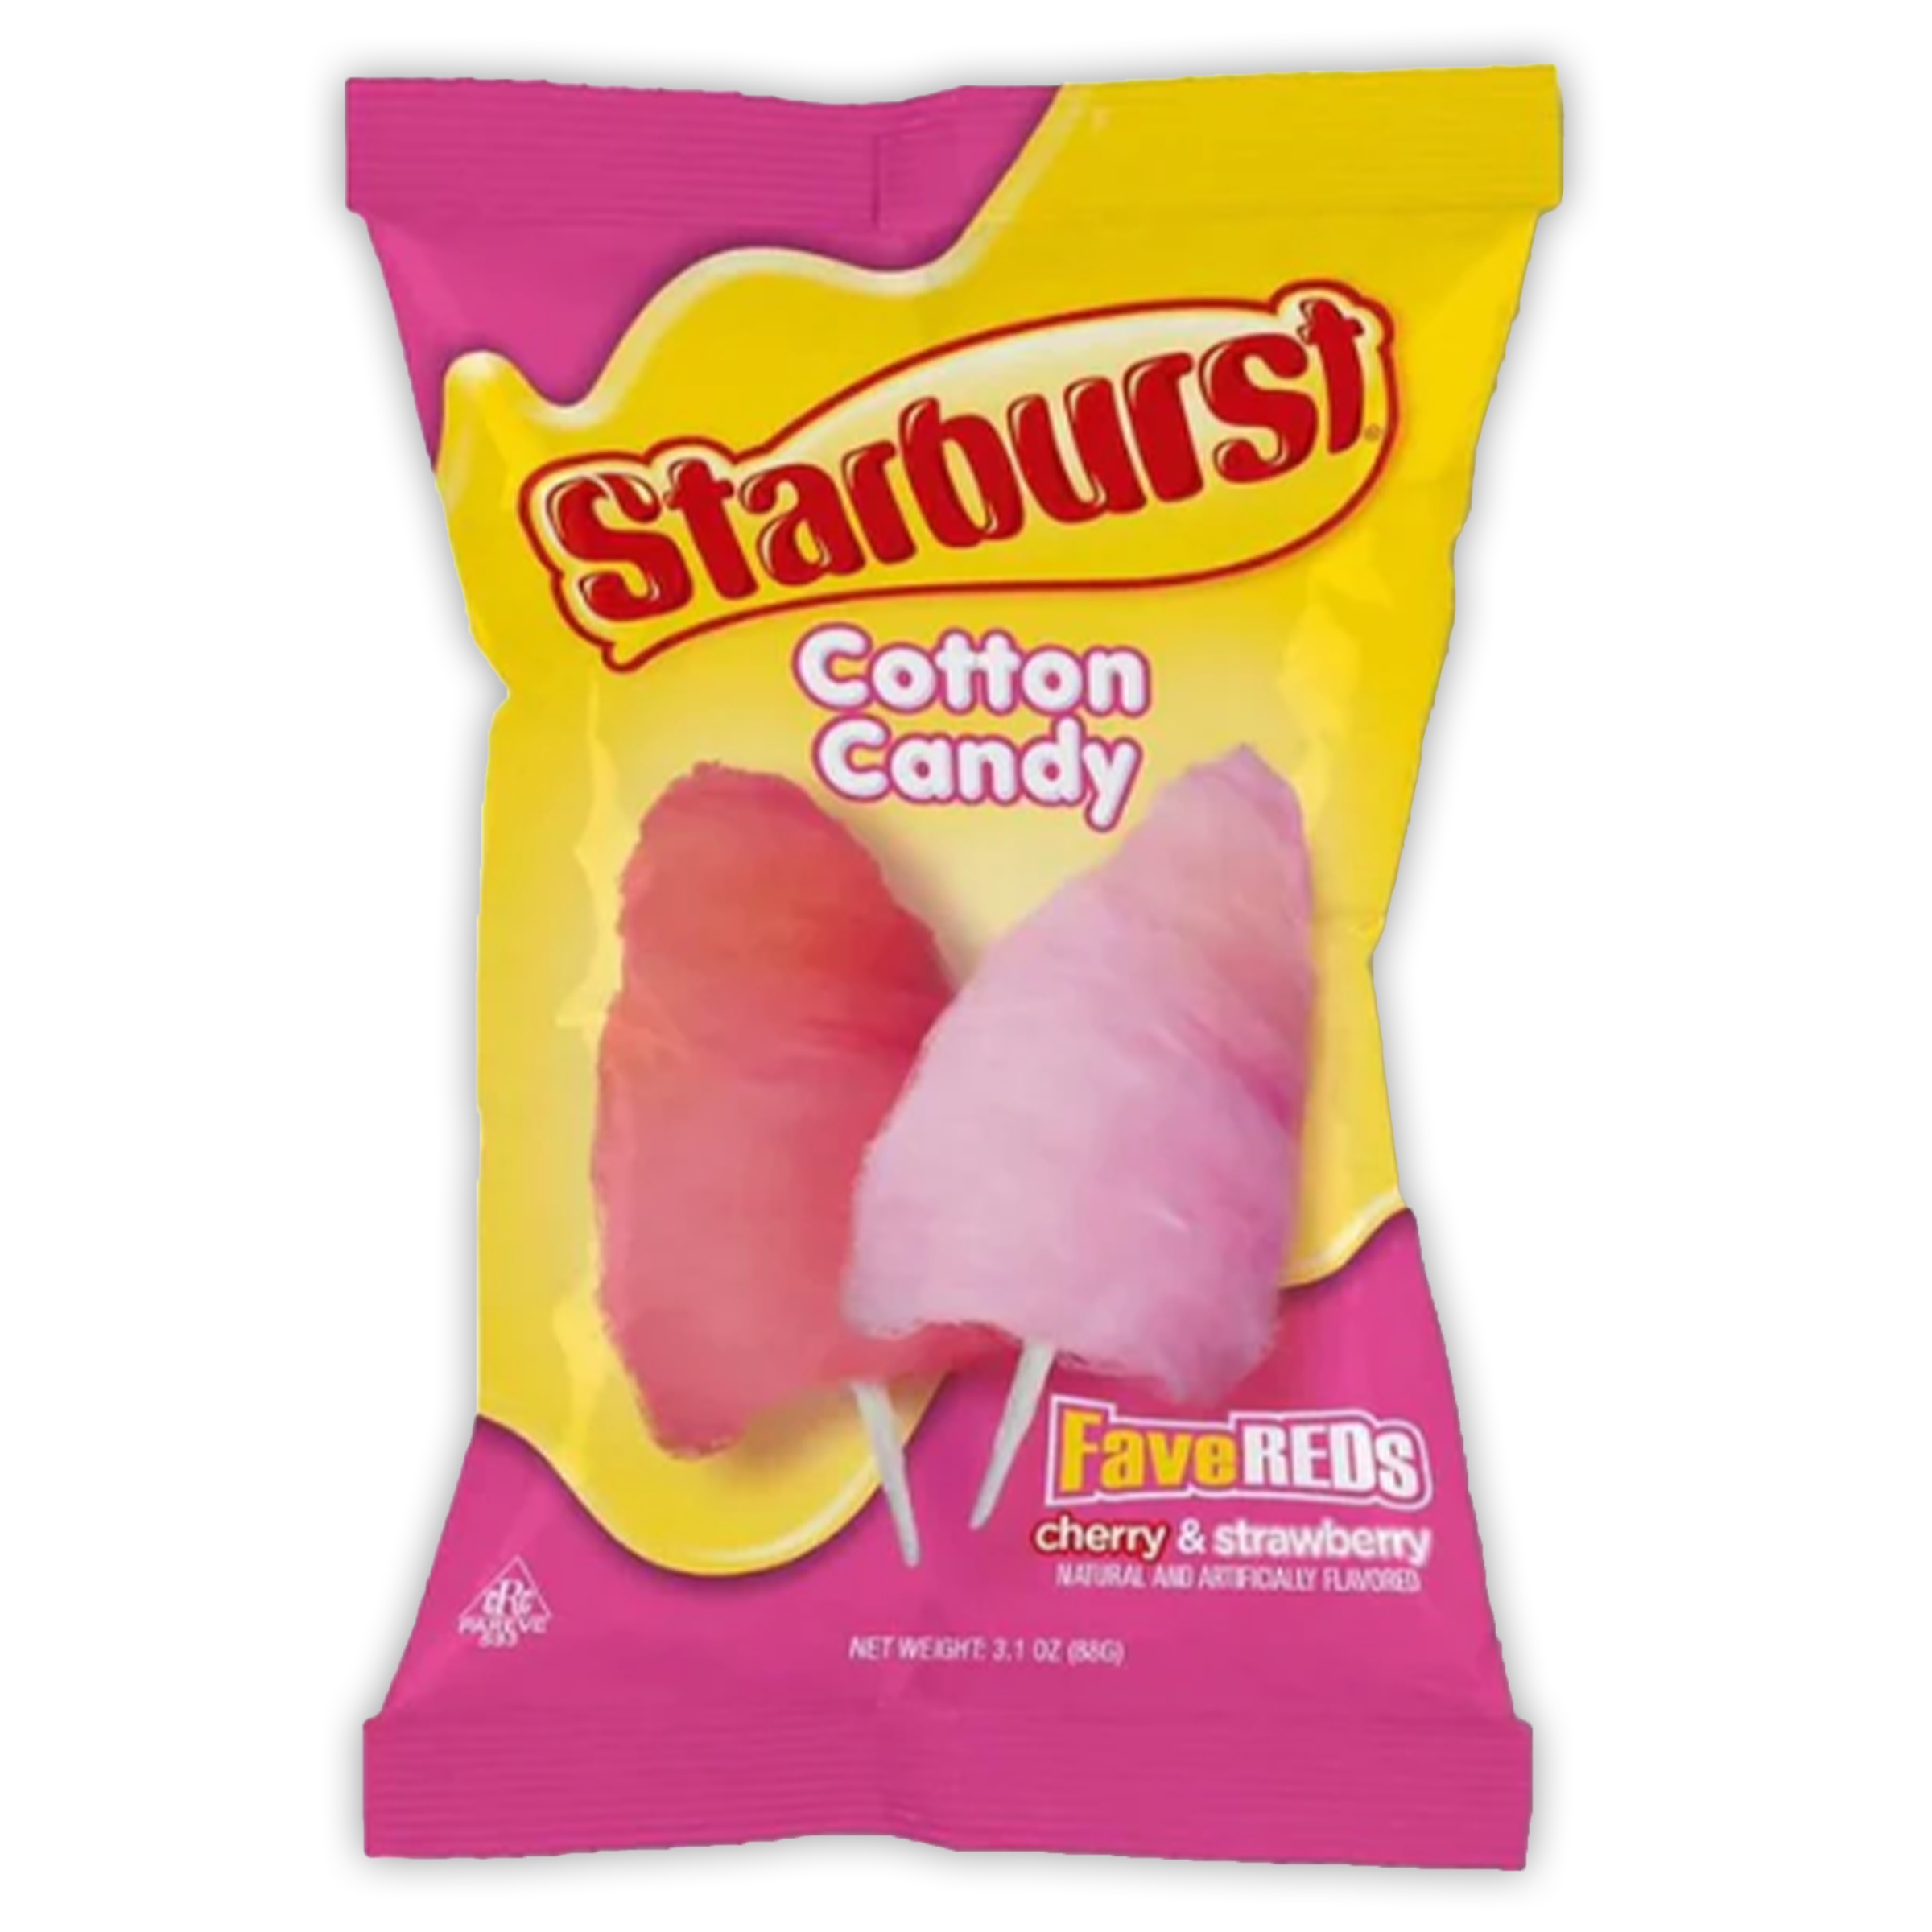 Starburst Favereds Cotton Candy